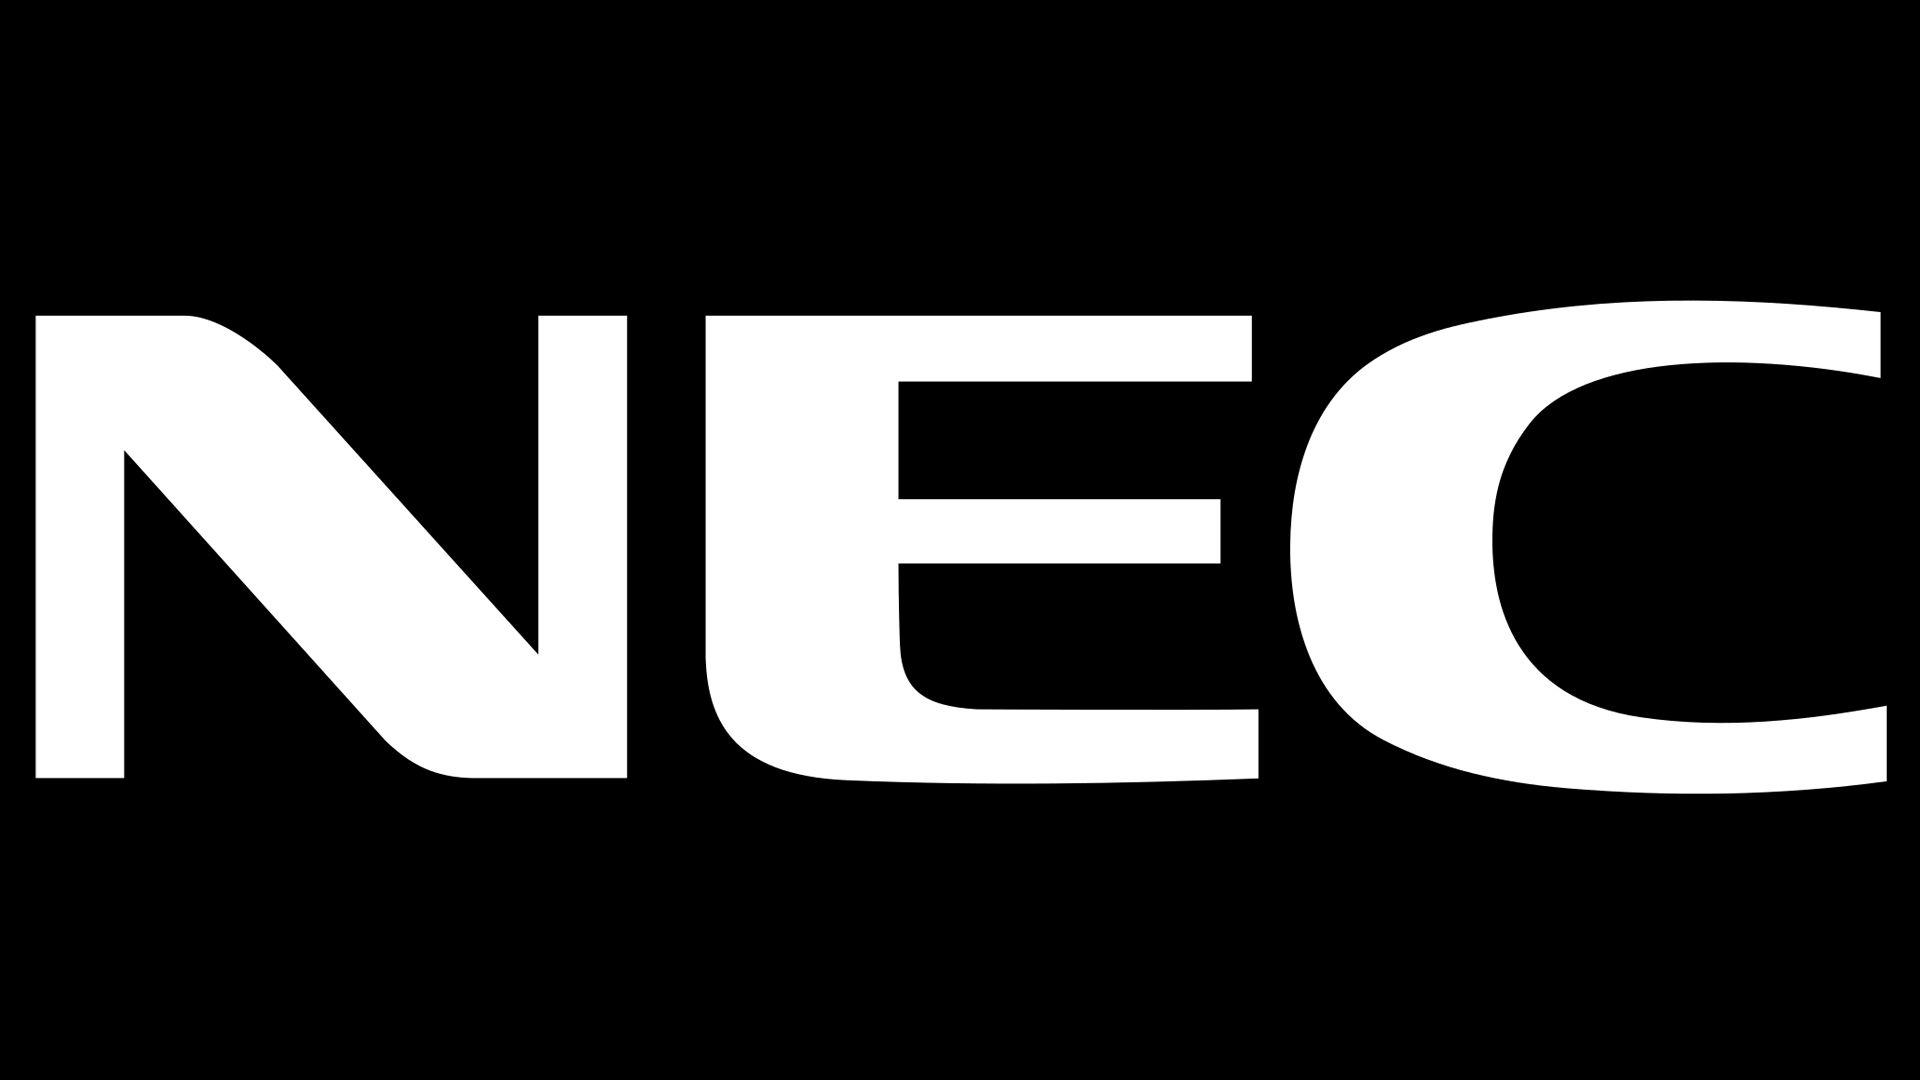 NEC Logo - NEC Logo, NEC Symbol, Meaning, History and Evolution